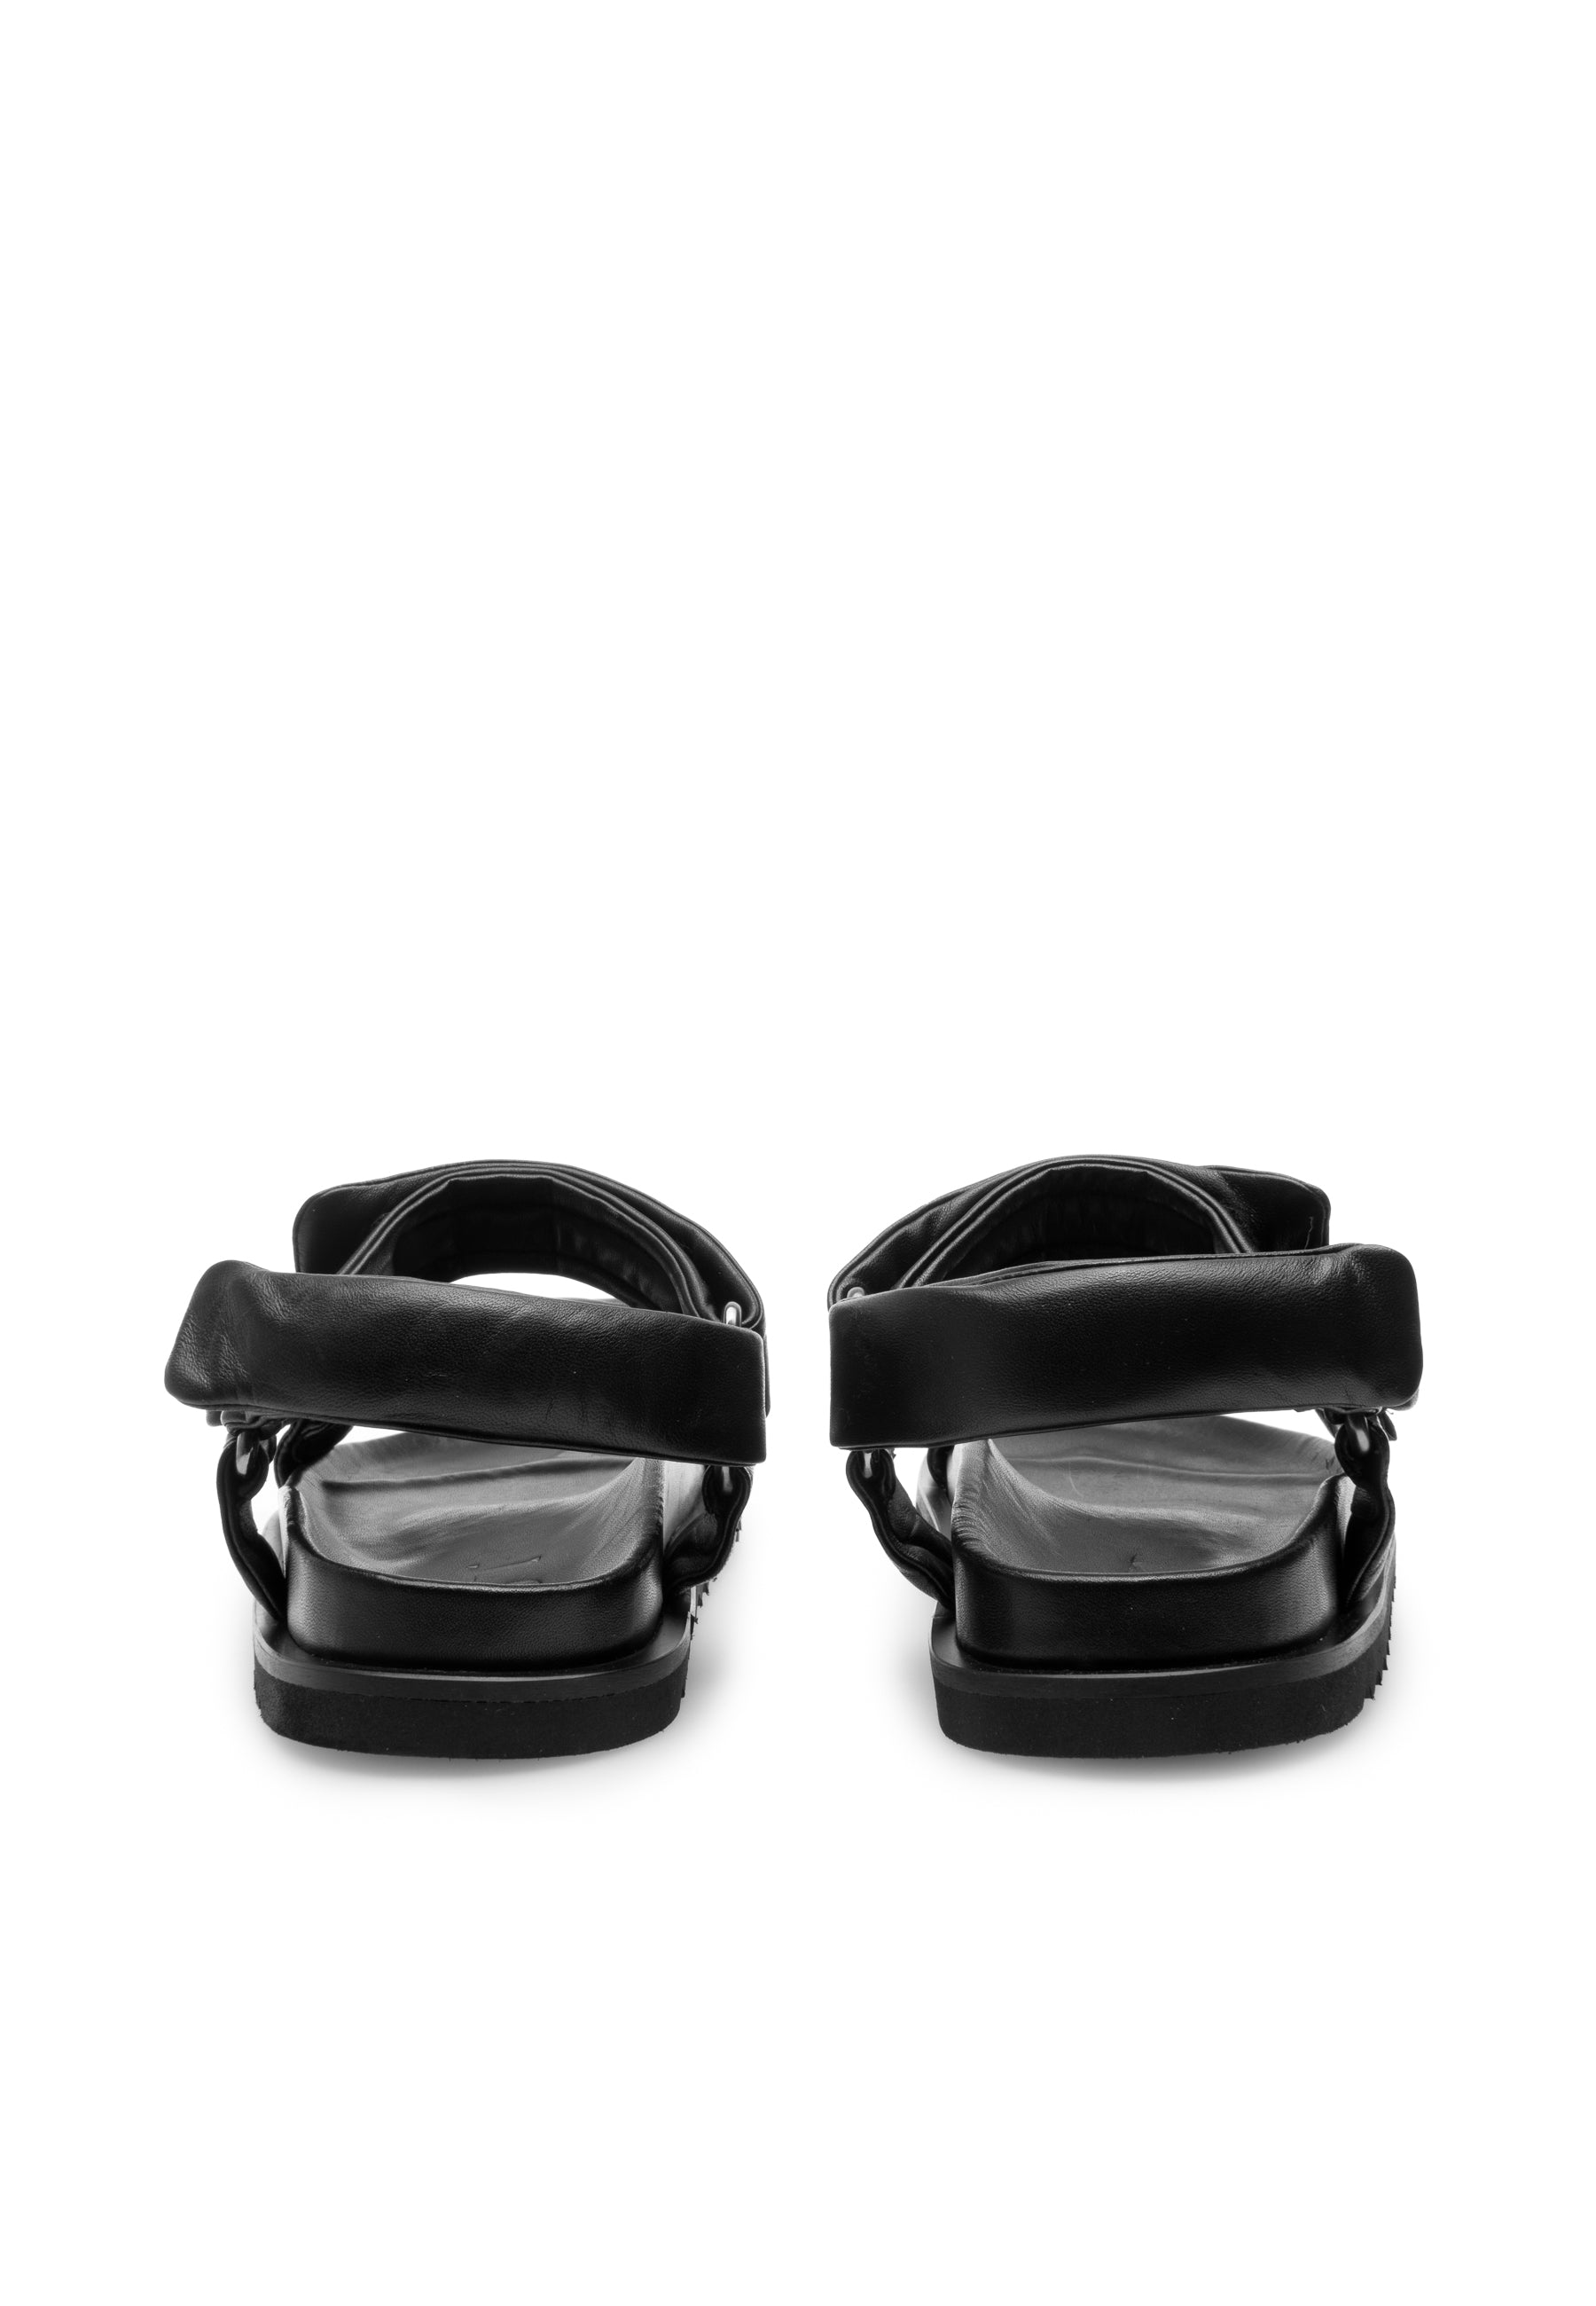 Flora Black Leather Sandals LAST1541 - 5